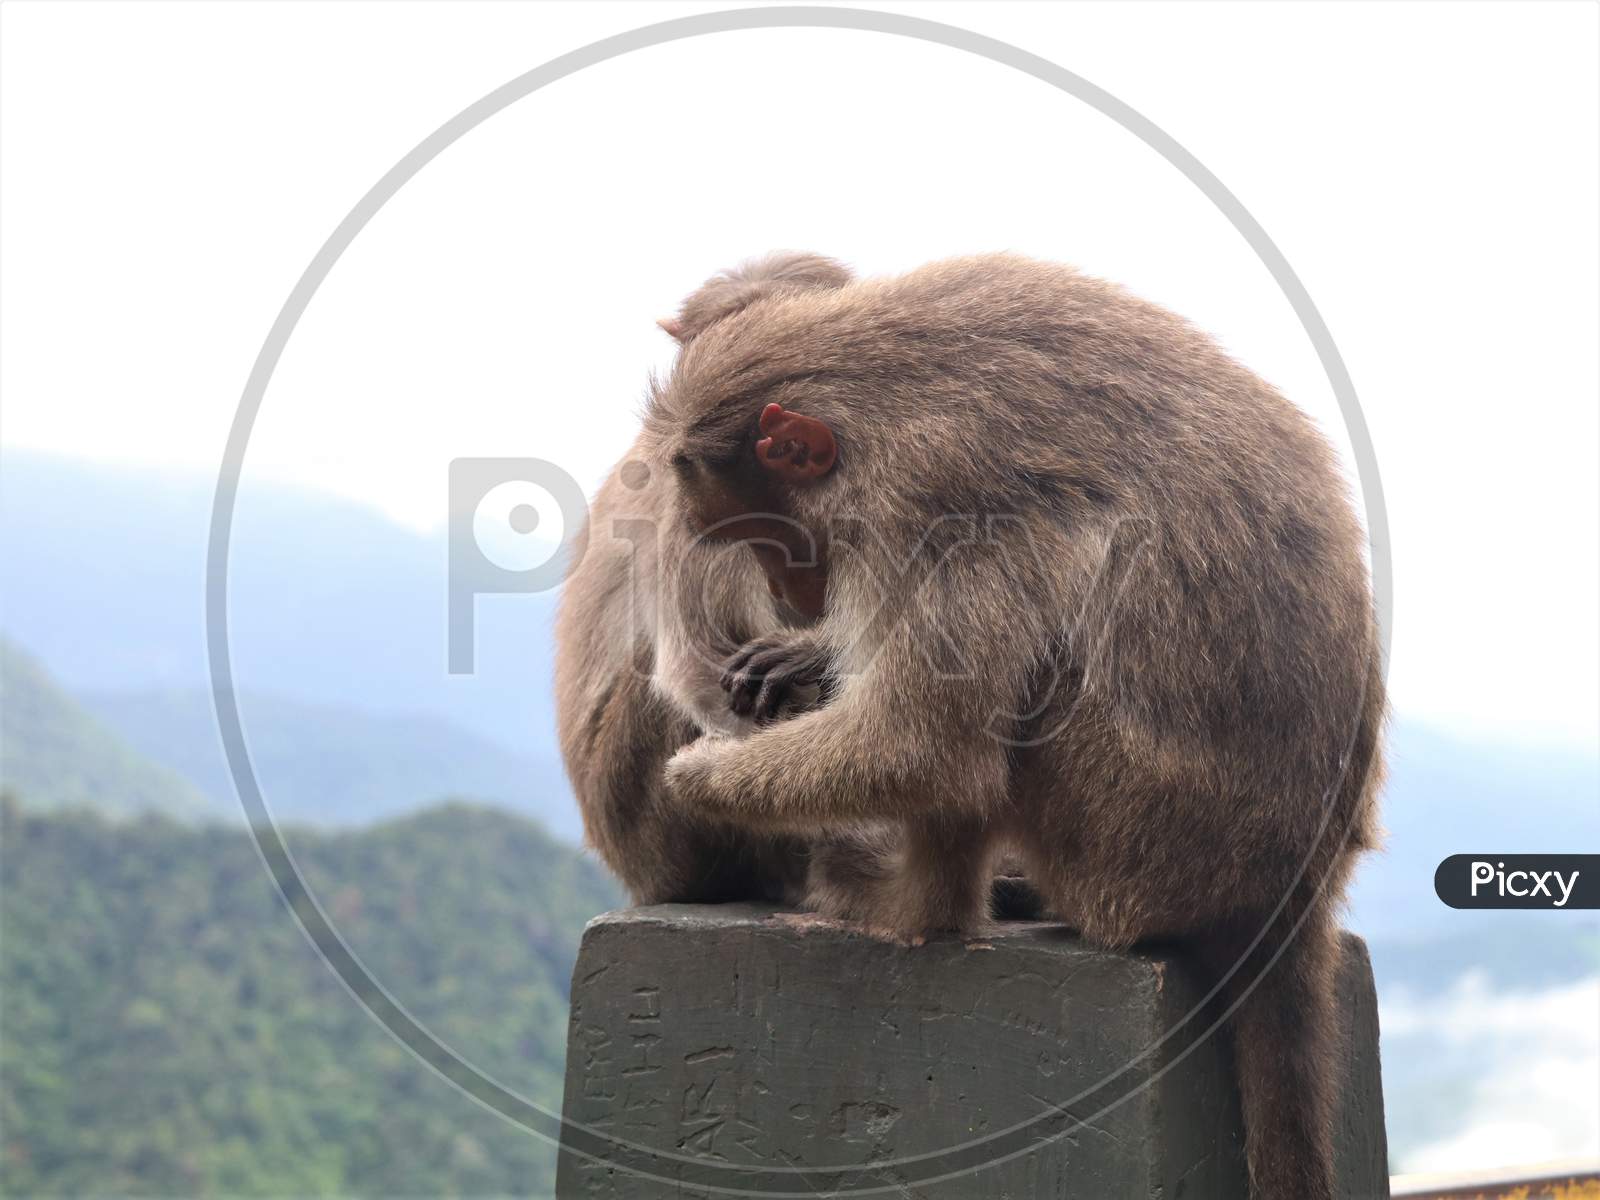 Monkeys catching lice on the roadside